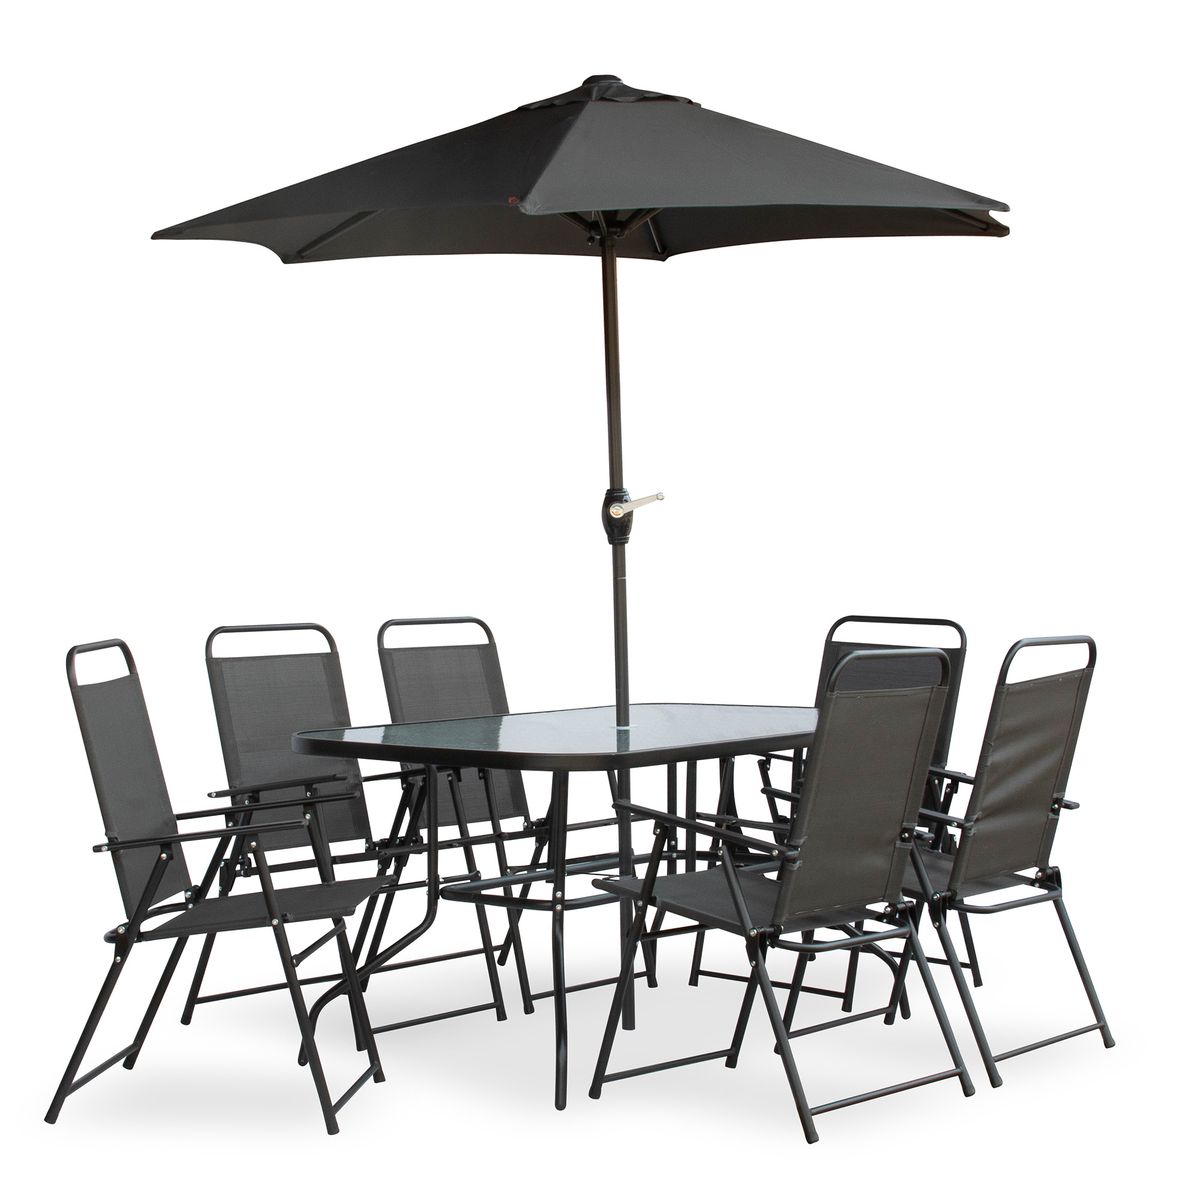 Hazlo 8 Piece Outdoor Dining Glass Patio Table Chair Umbrella Set - Black